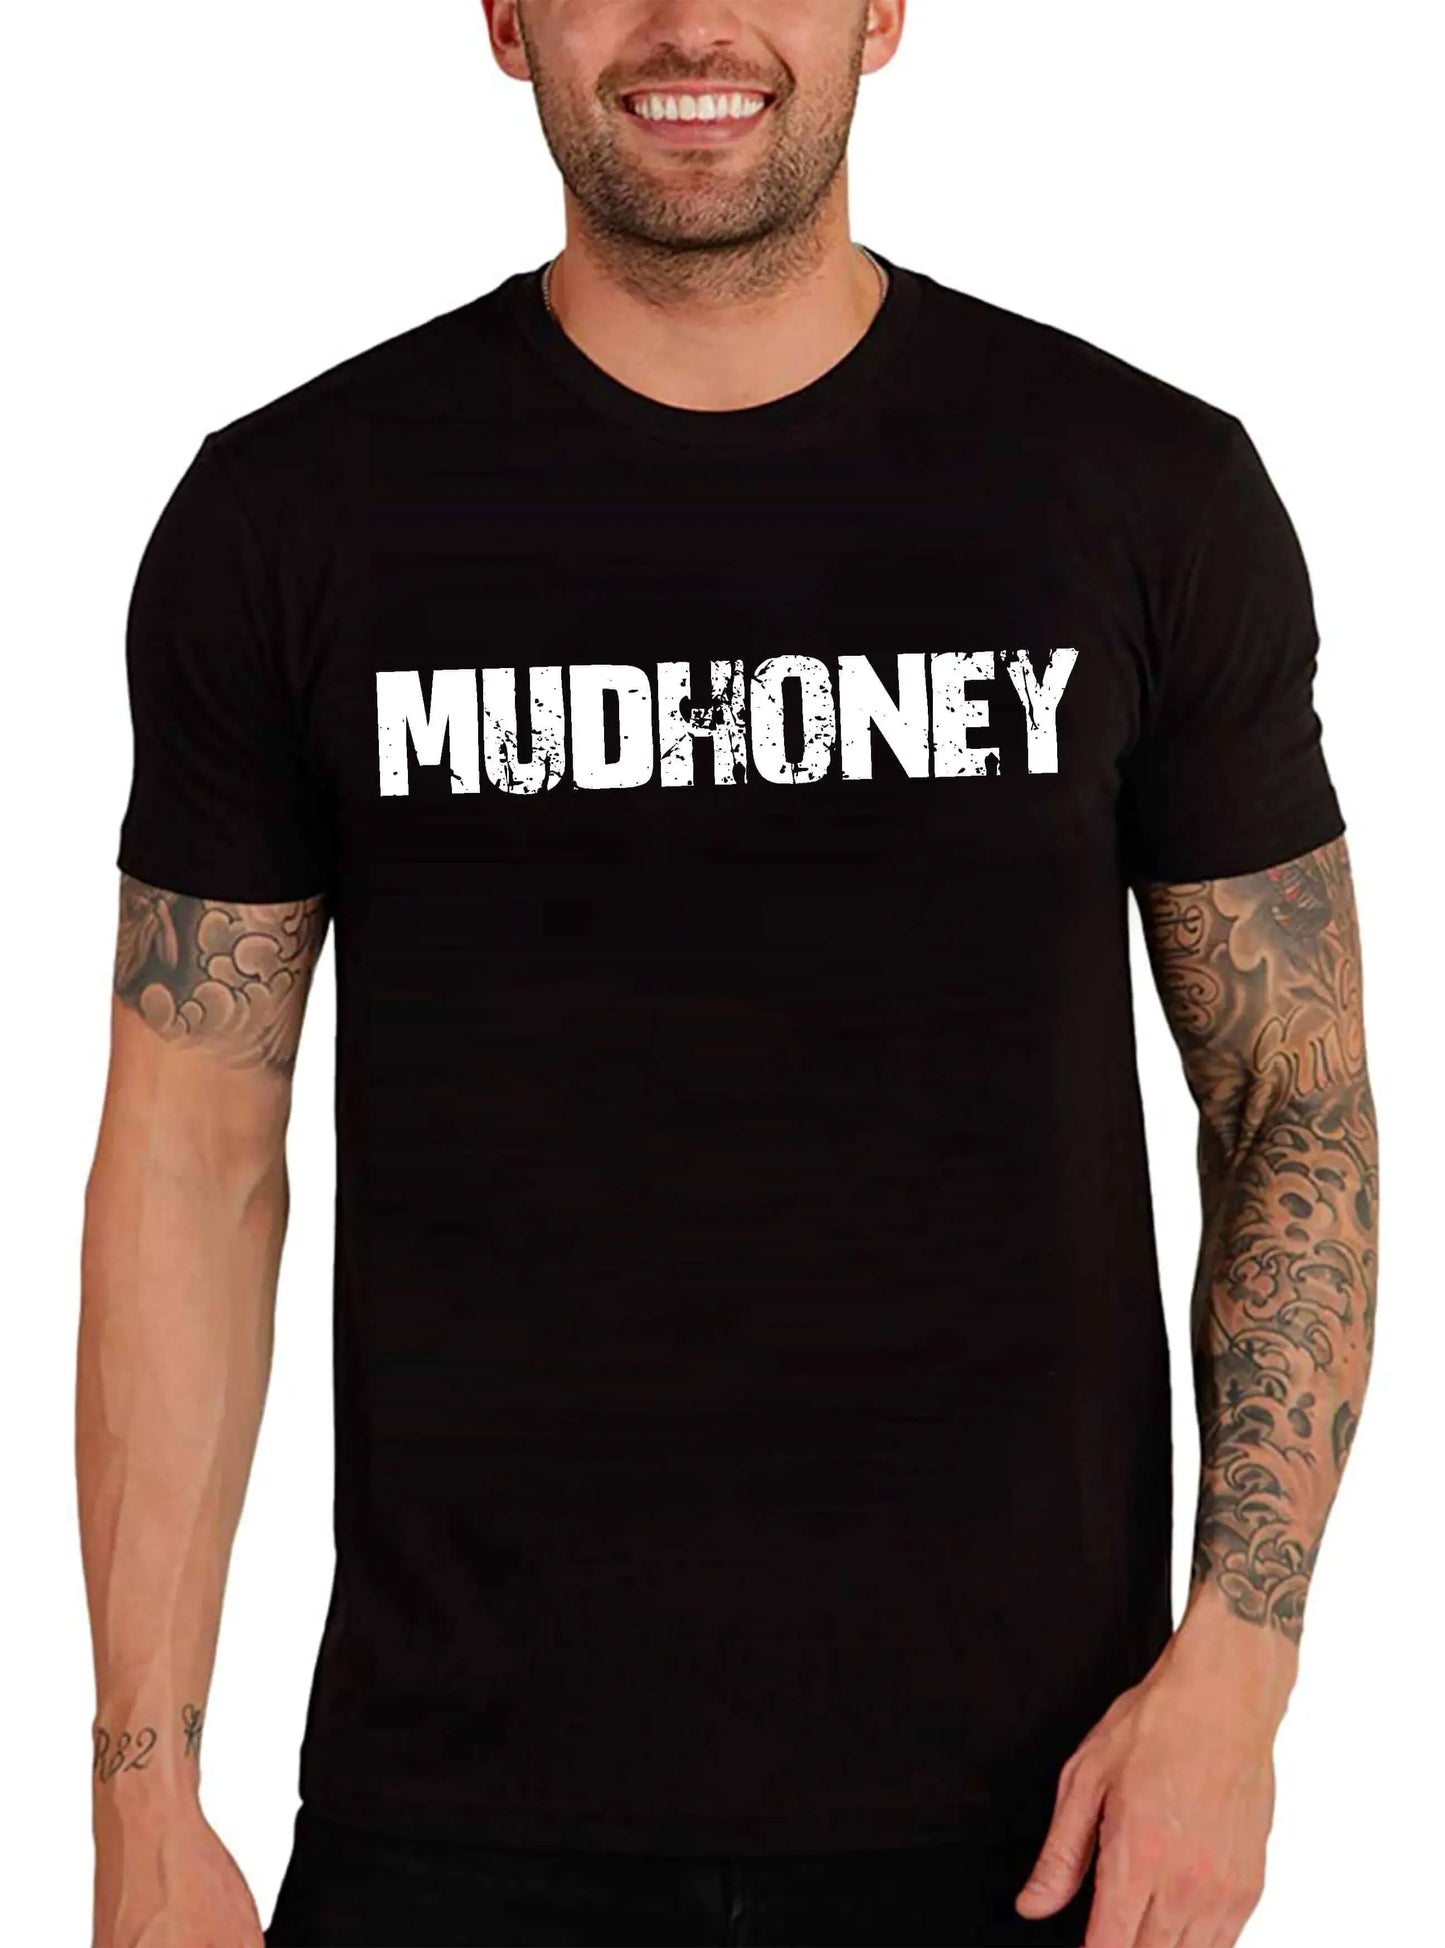 Men's Graphic T-Shirt Mudhoney Eco-Friendly Limited Edition Short Sleeve Tee-Shirt Vintage Birthday Gift Novelty